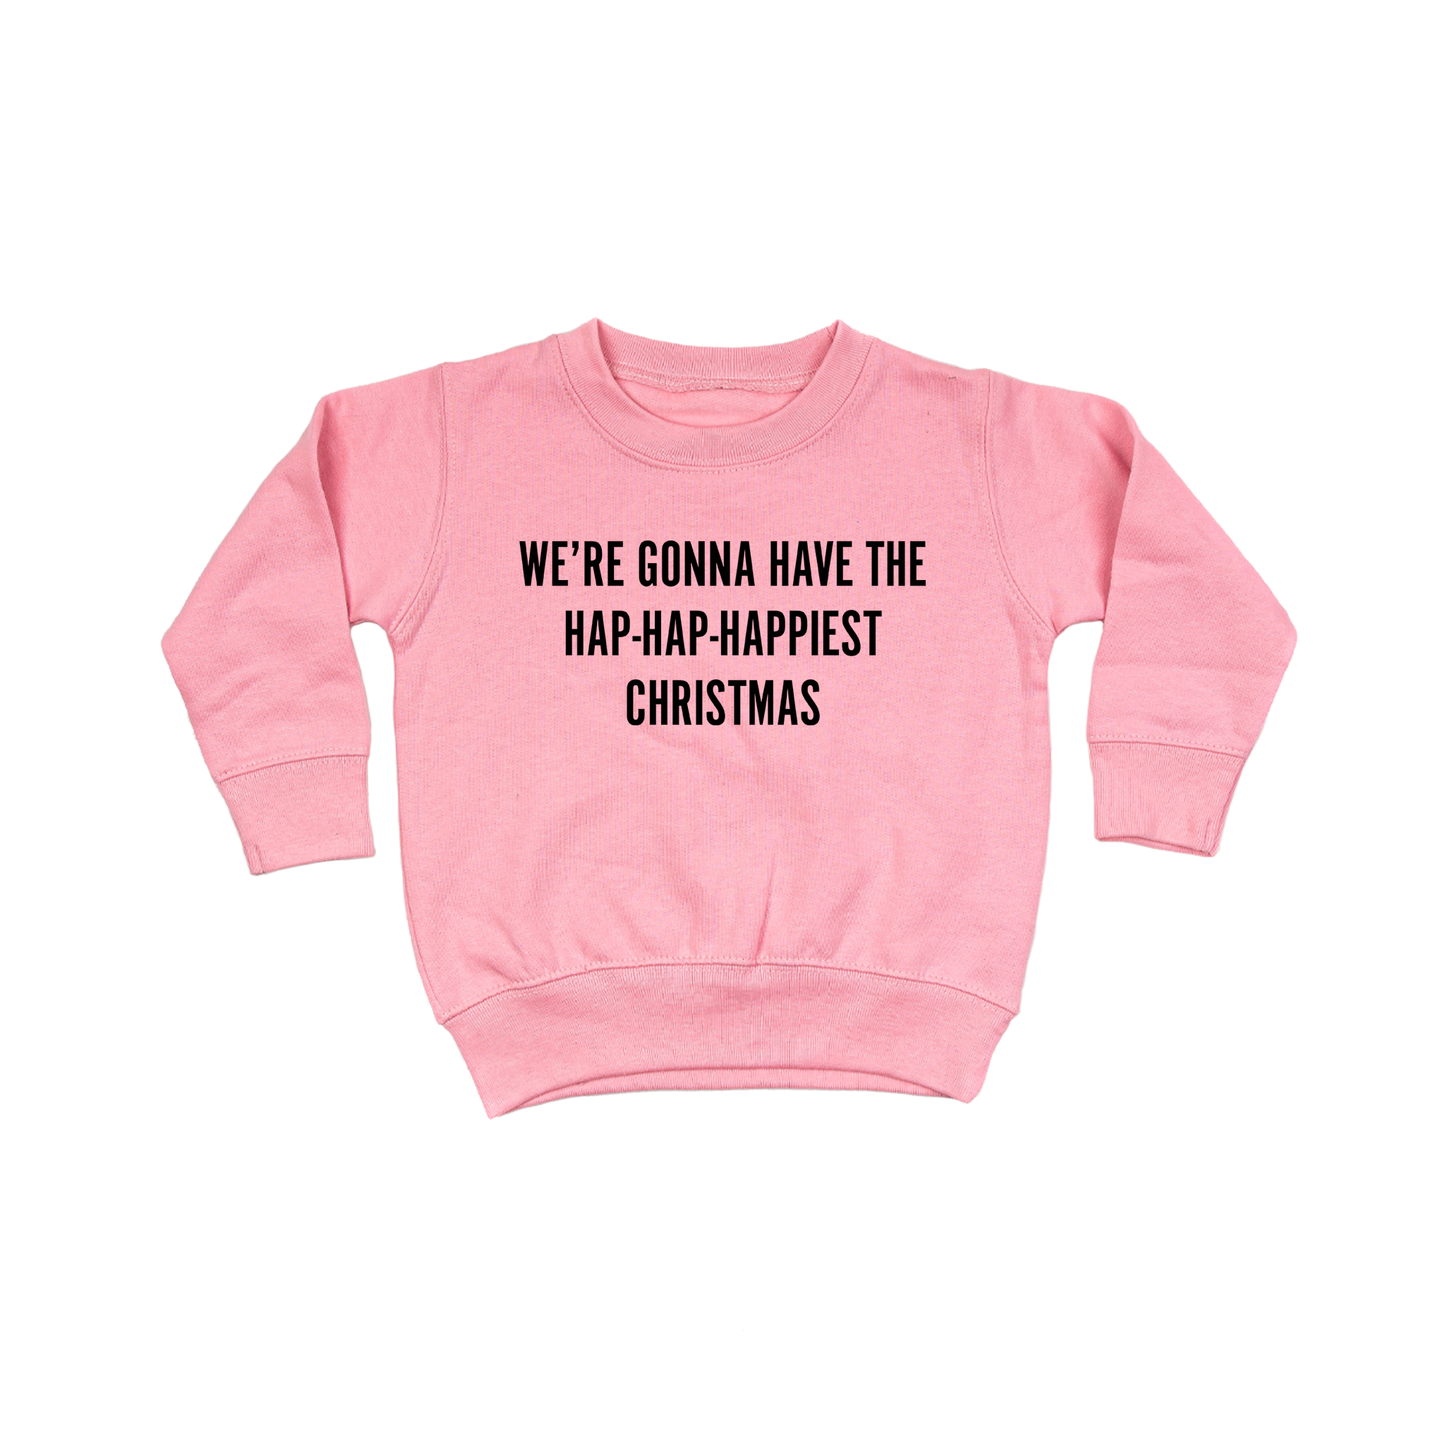 Hap-Hap-Happiest Christmas (Black) - Kids Sweatshirt (Pink)